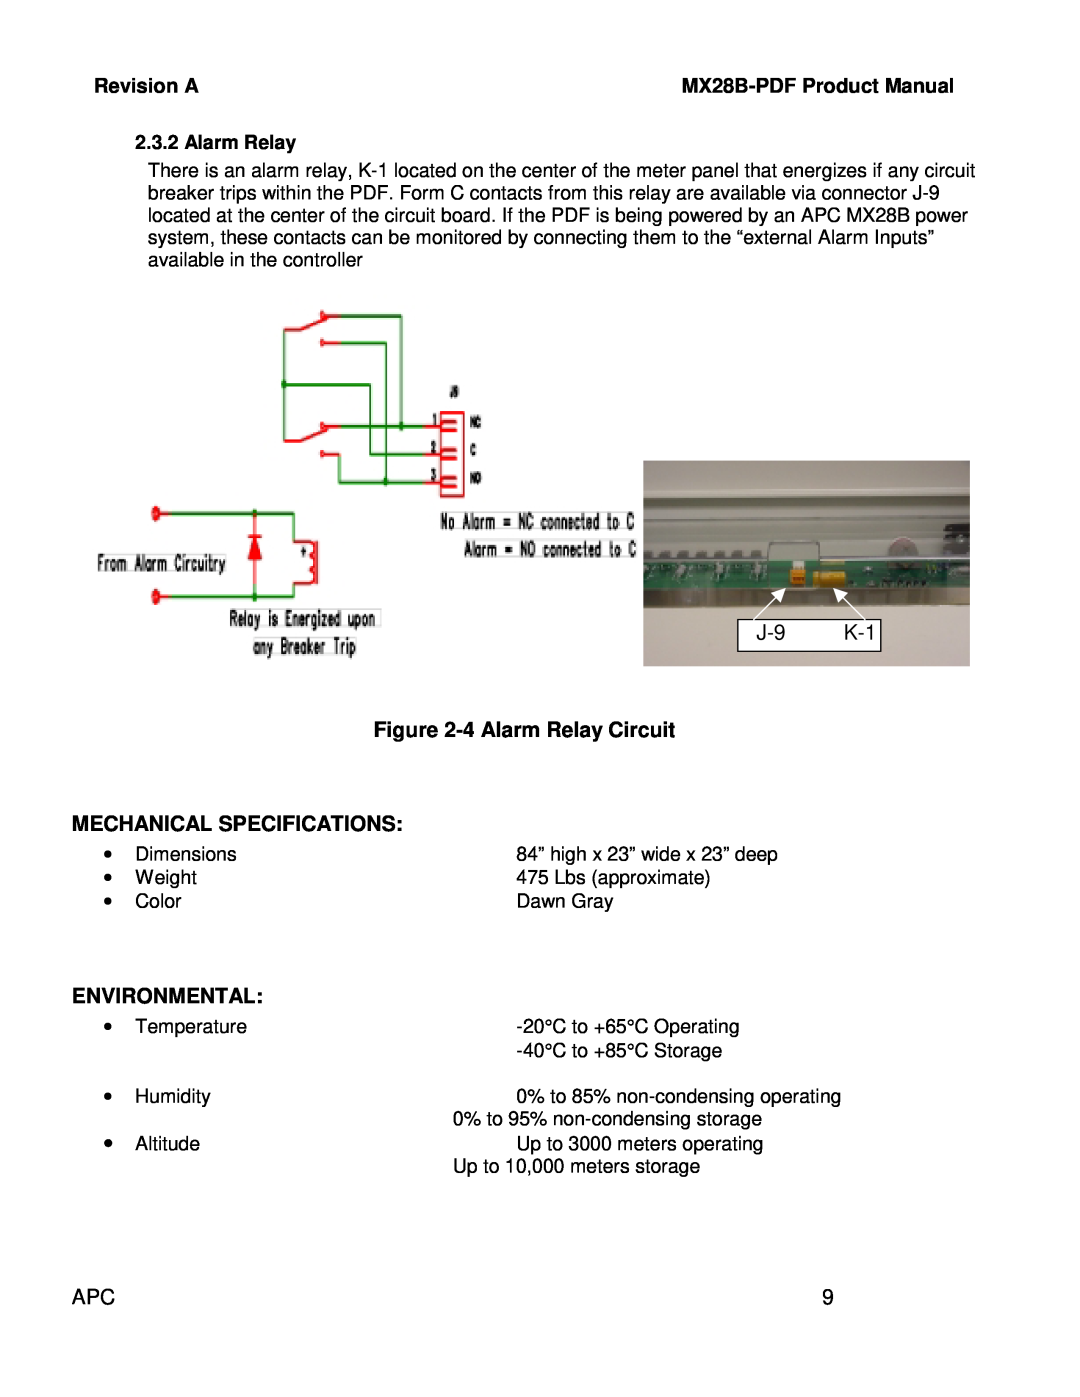 American Power Conversion MX28B-PDF manual J-9 K-1, 4 Alarm Relay Circuit MECHANICAL SPECIFICATIONS, Environmental 